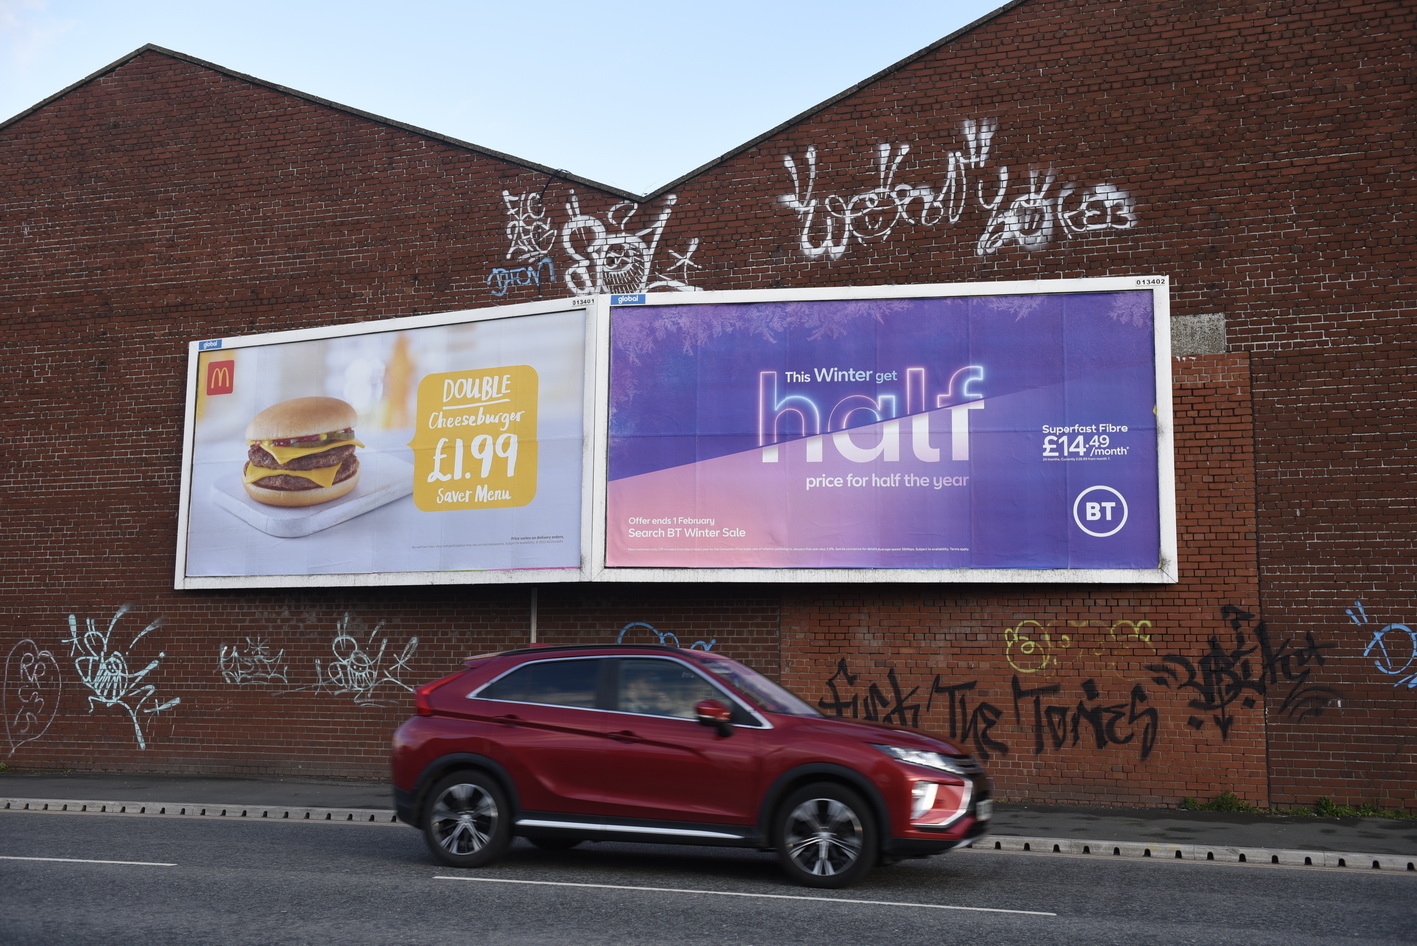 large ooh advertising in Merseyside photos